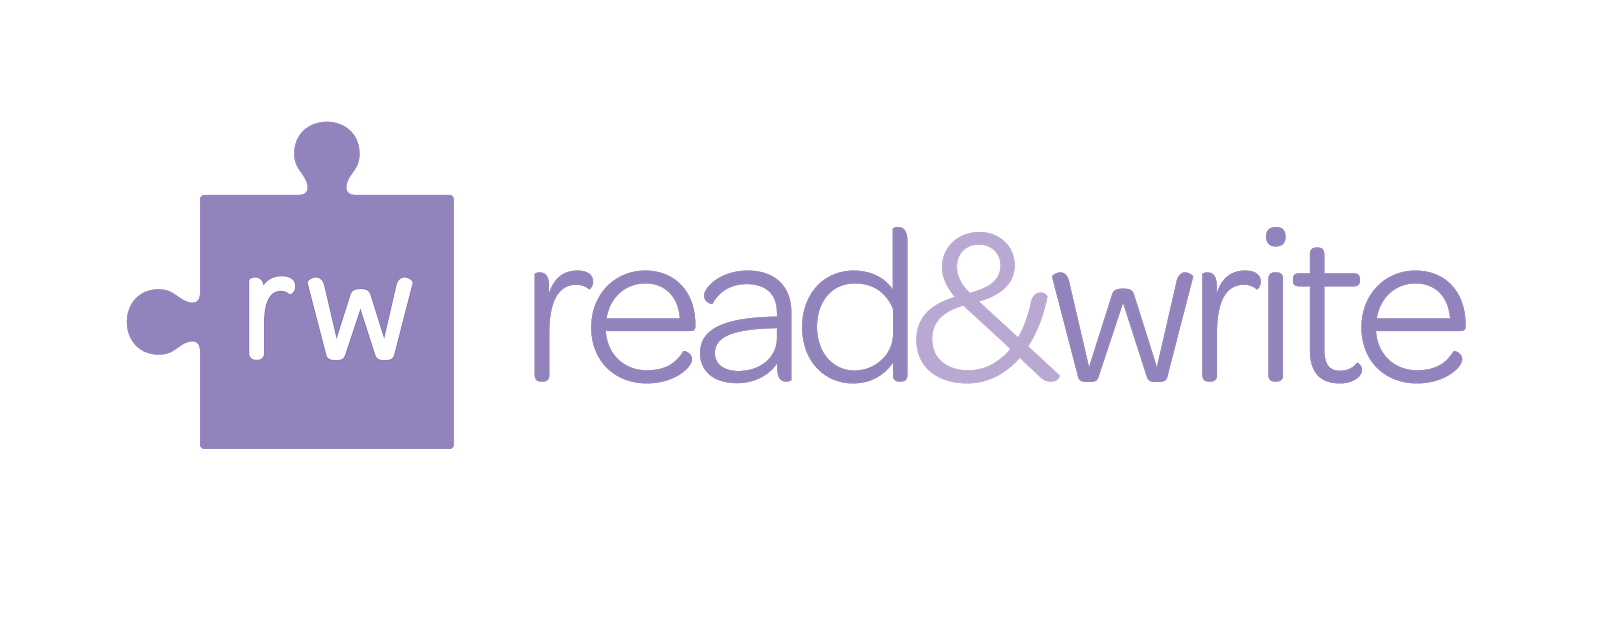 Read&Write logo